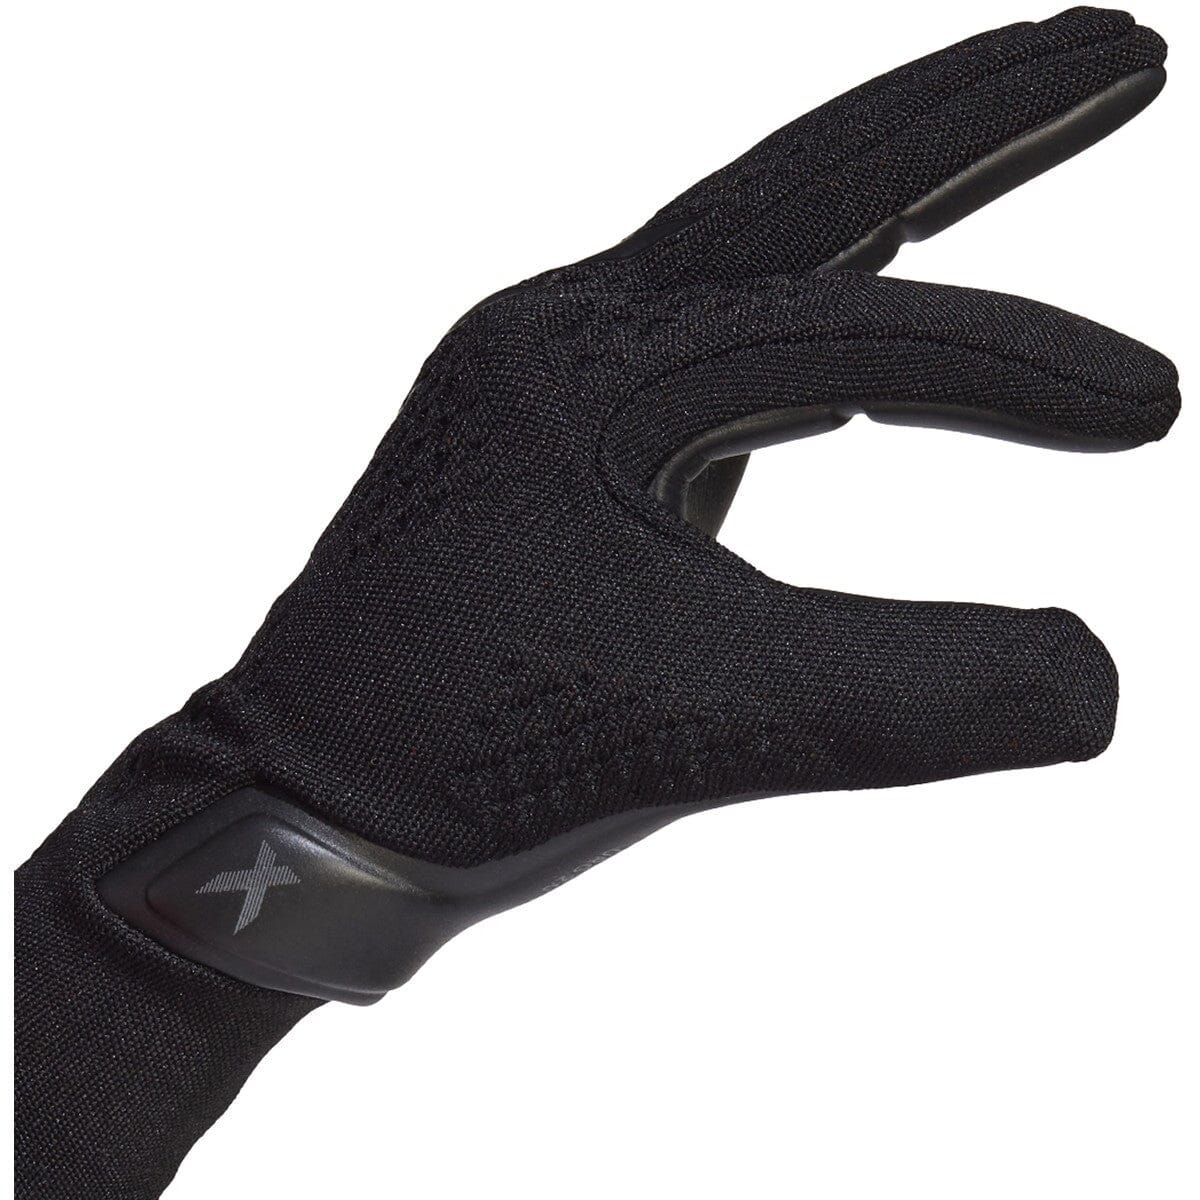 Adidas X Pro Goalkeeper Gloves